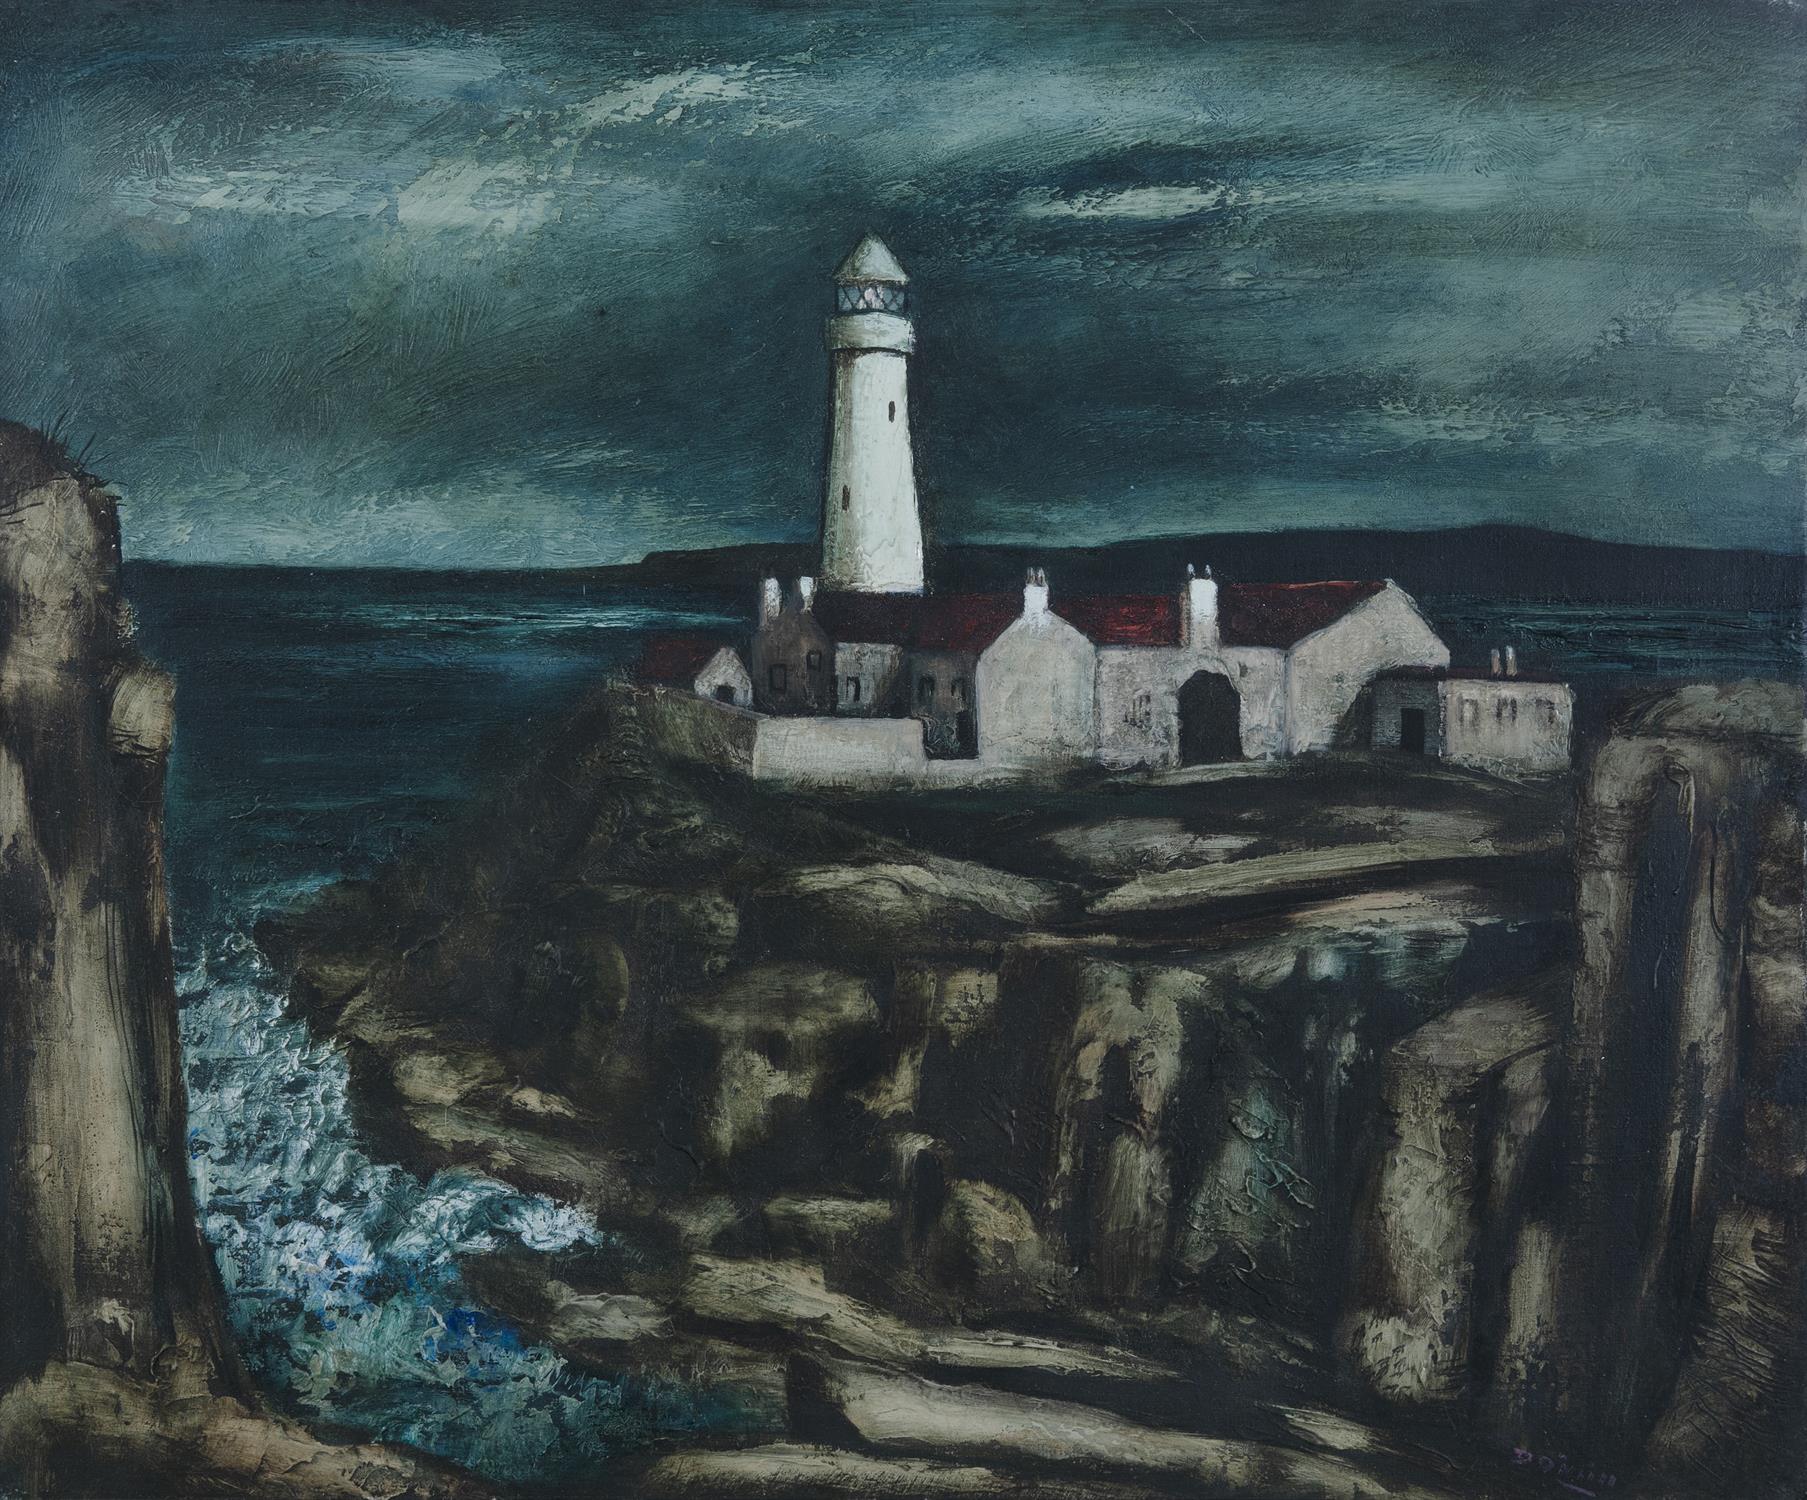 Daniel O’Neill (1920-1974) The Lighthouse Oil on canvas, 50 x 60cm (20 x 24”) Signed